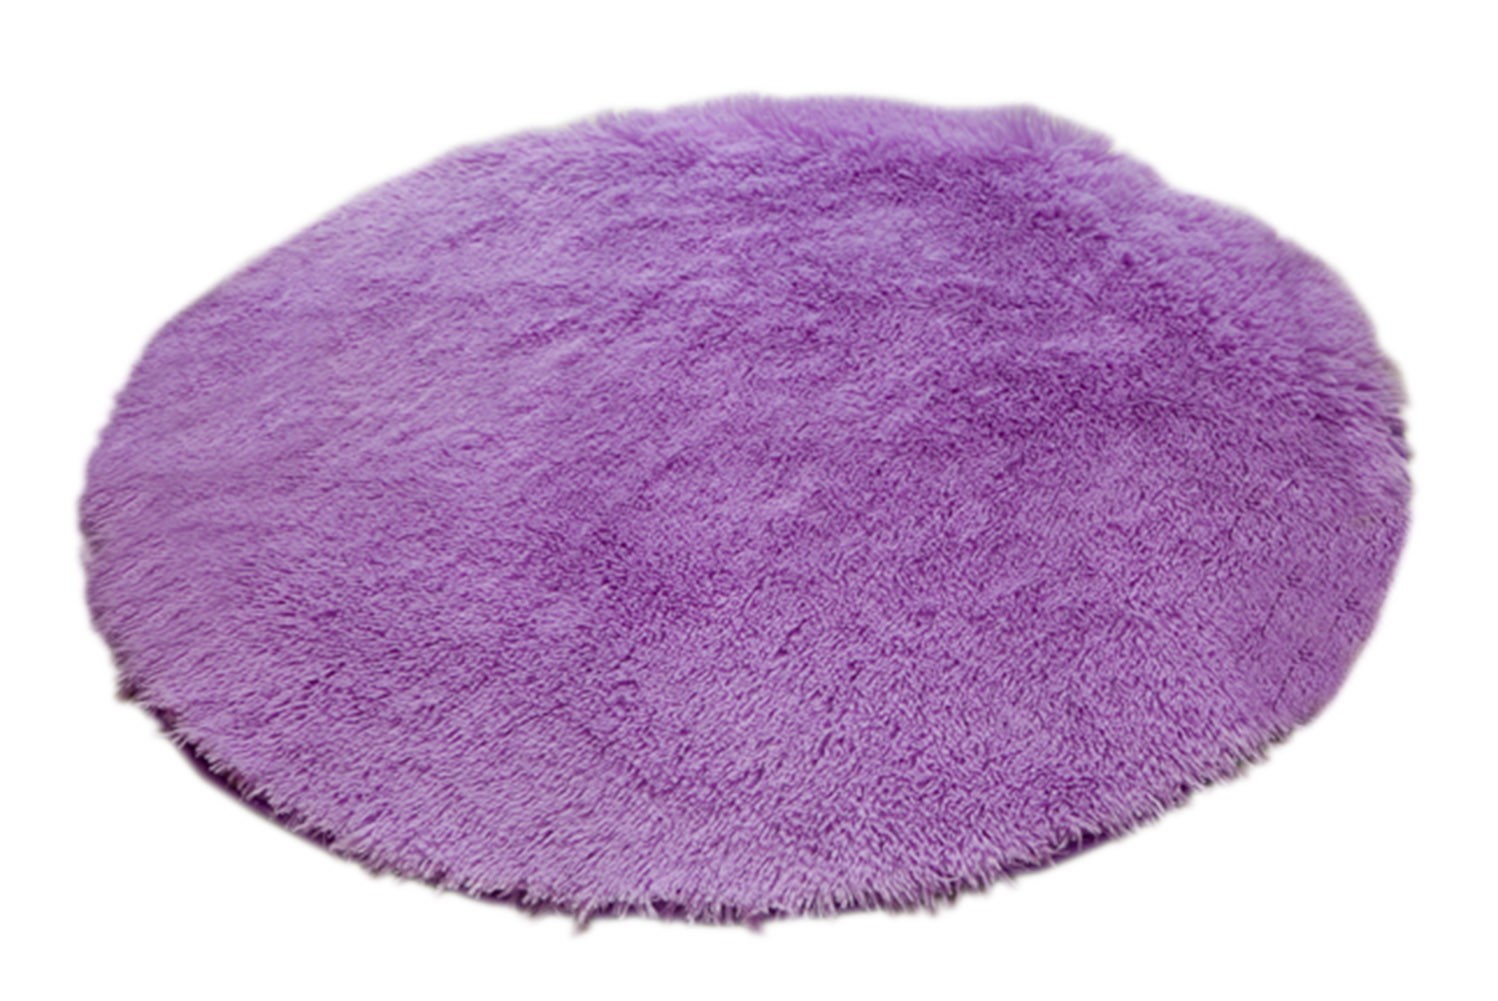 [Circle] Home Decor Rug Bathroom/Living Room Carpet Indoor/Outdoor Mat,Purple,31.5x31.5 inches